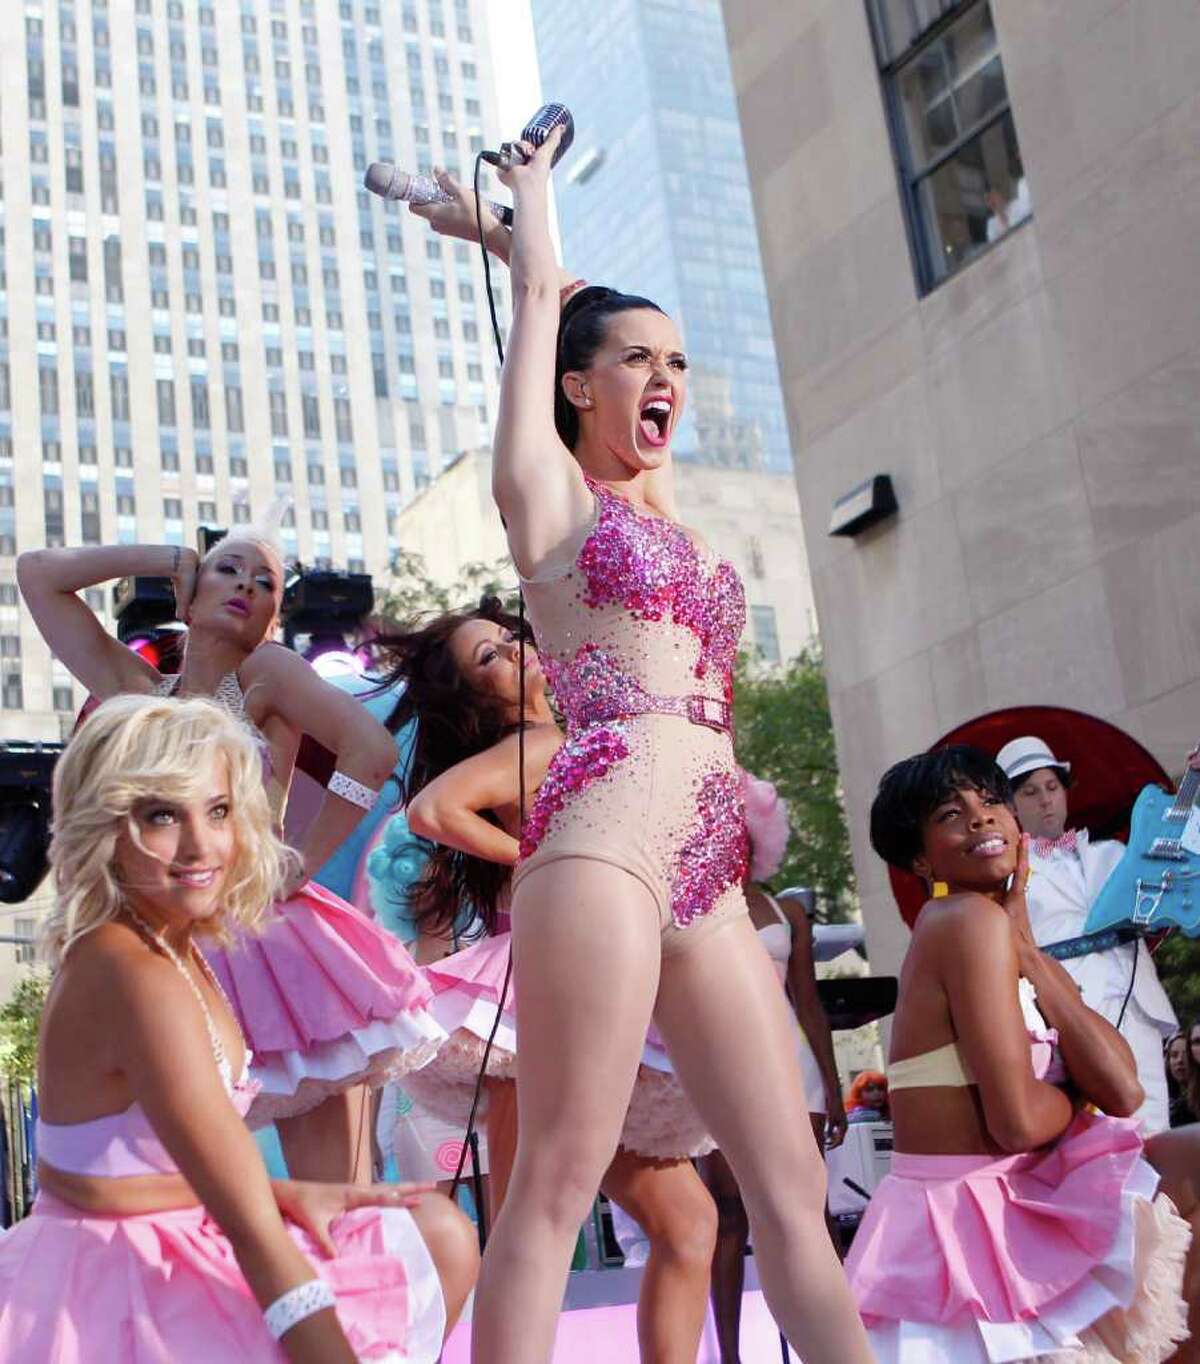 Singer Katy Perry, center, performs on NBC's "Today" in New York's Rockefeller Center Friday, Aug. 27, 2010. (AP Photo/Jason DeCrow)